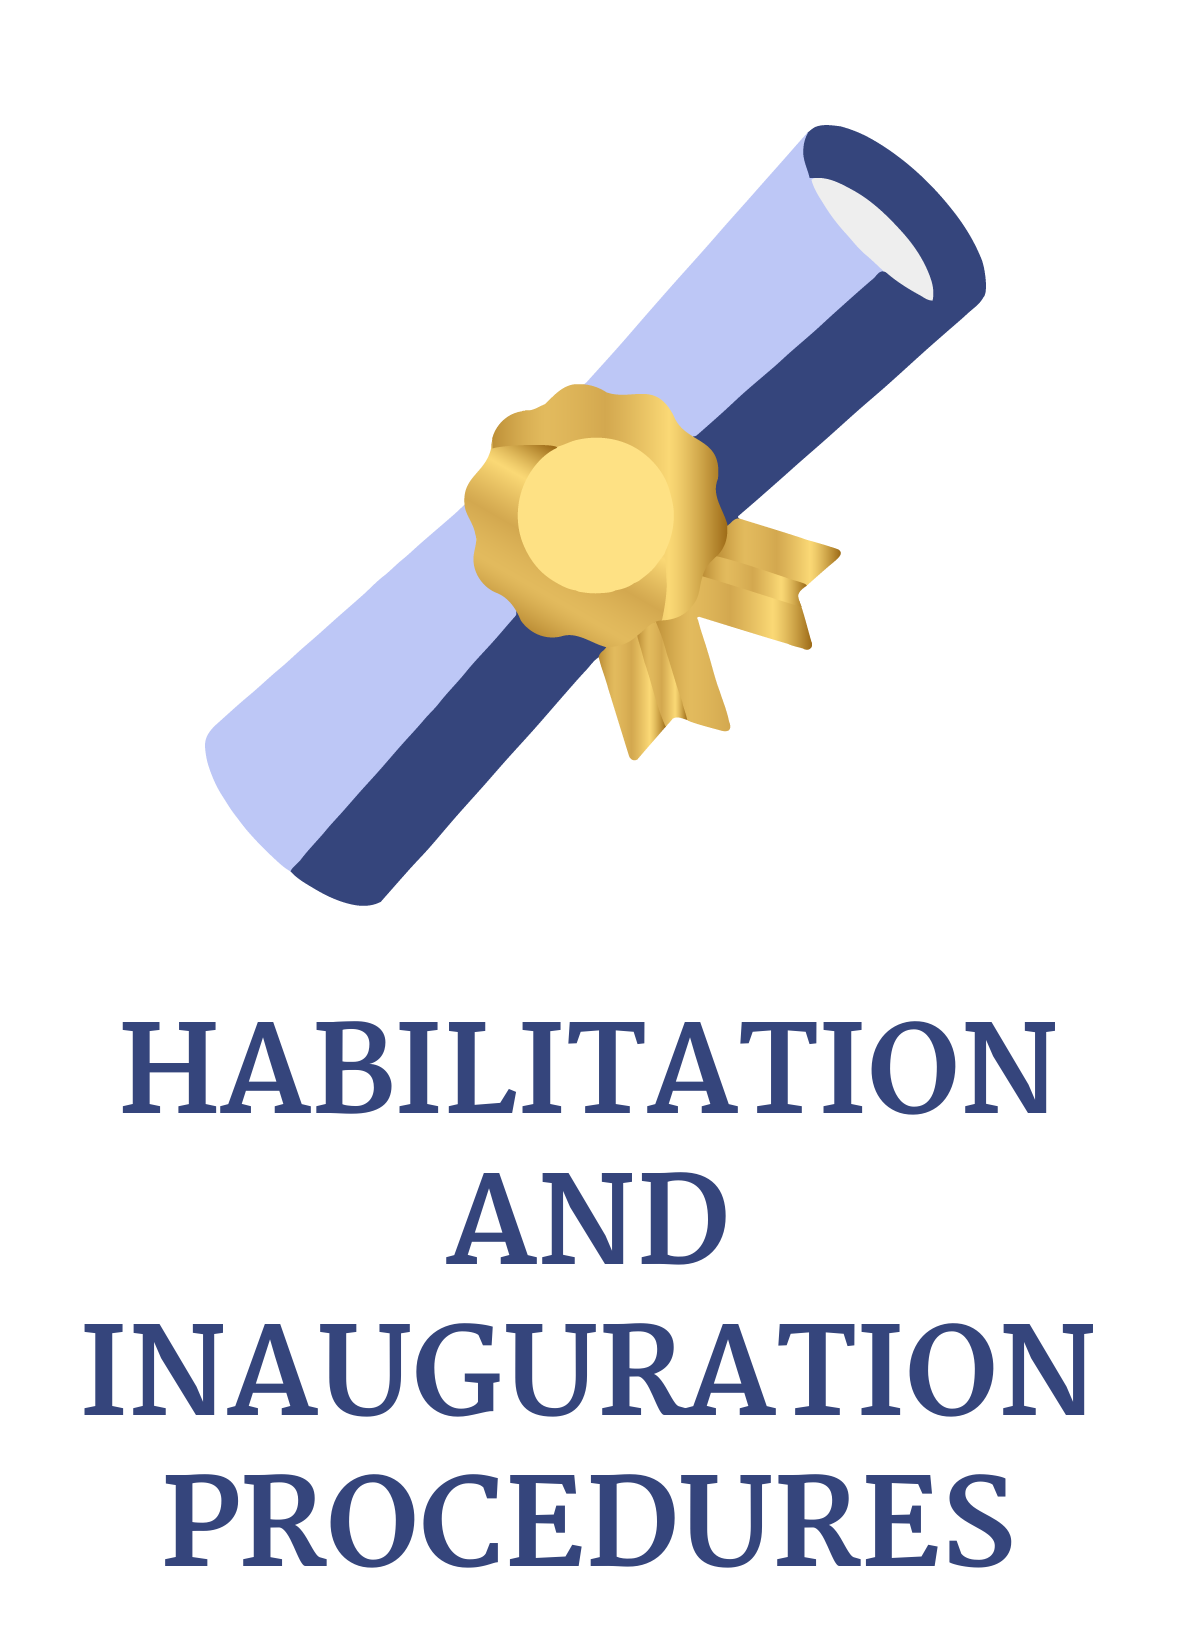 Habilitation and inauguration procedures